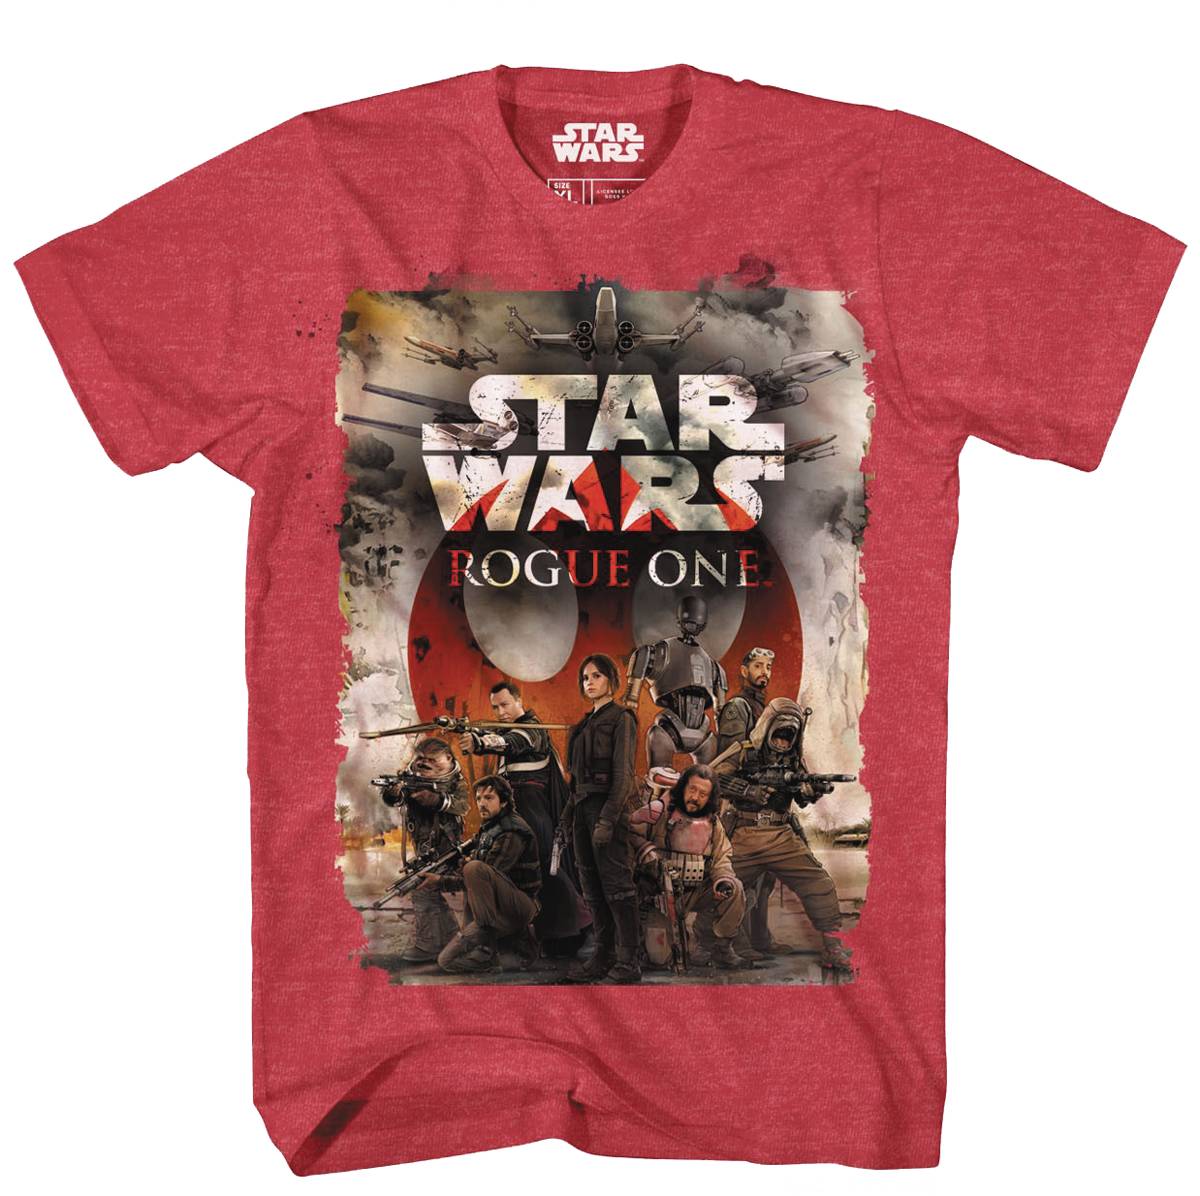 Star Wars Team One Red/blk Confetti T-Shirt XL